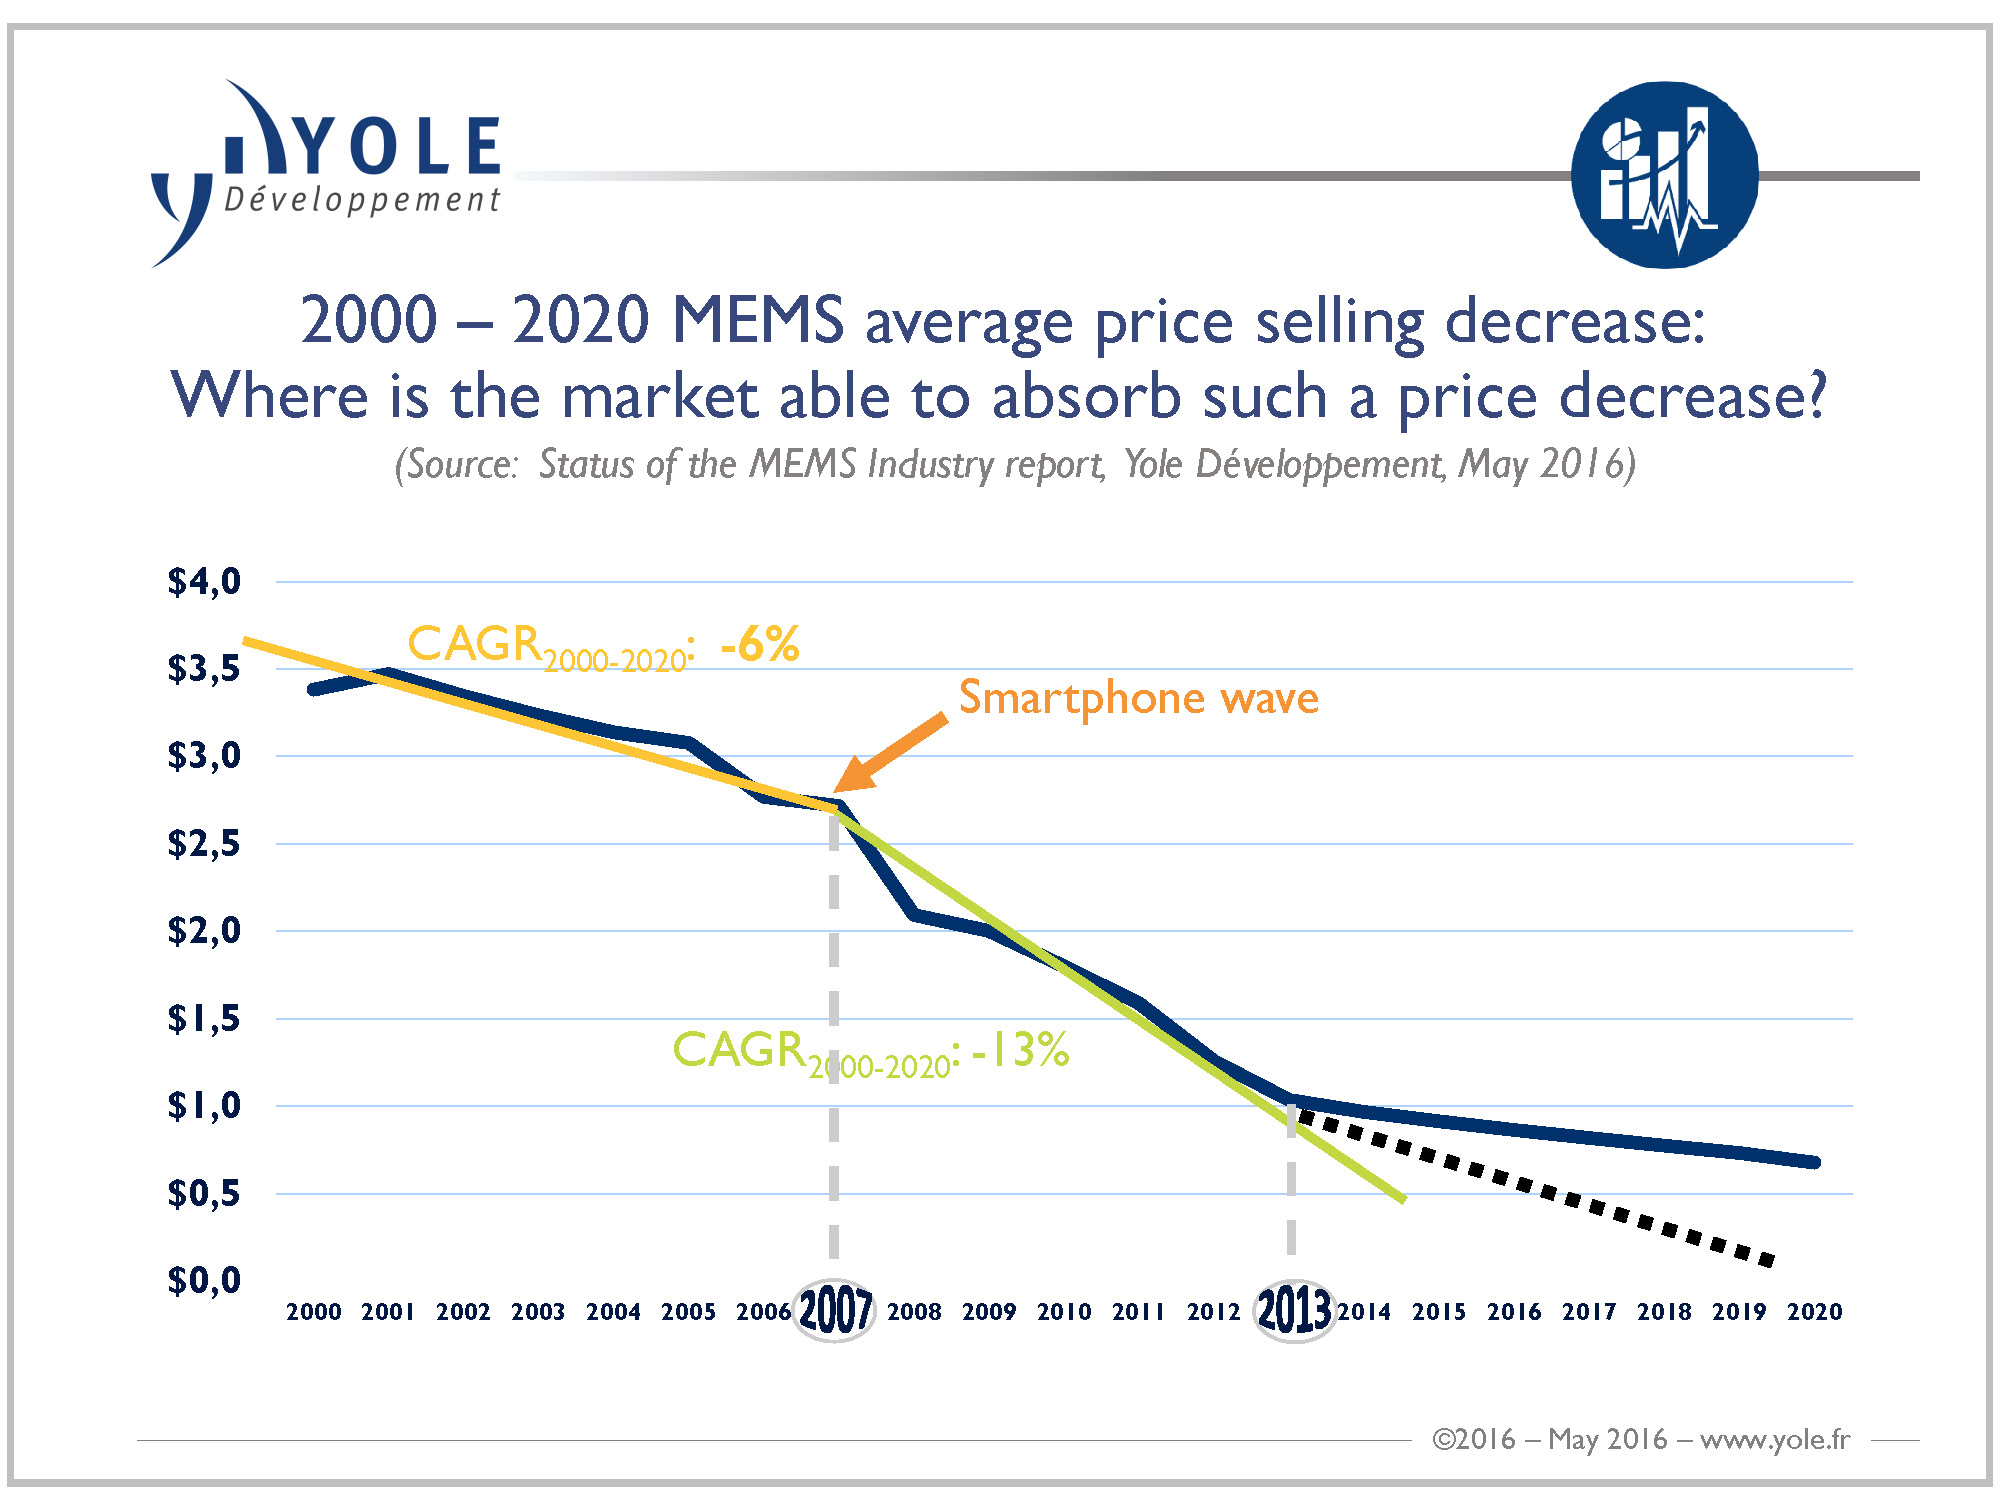 Uncertain times ahead for the MEMS market, says Yole